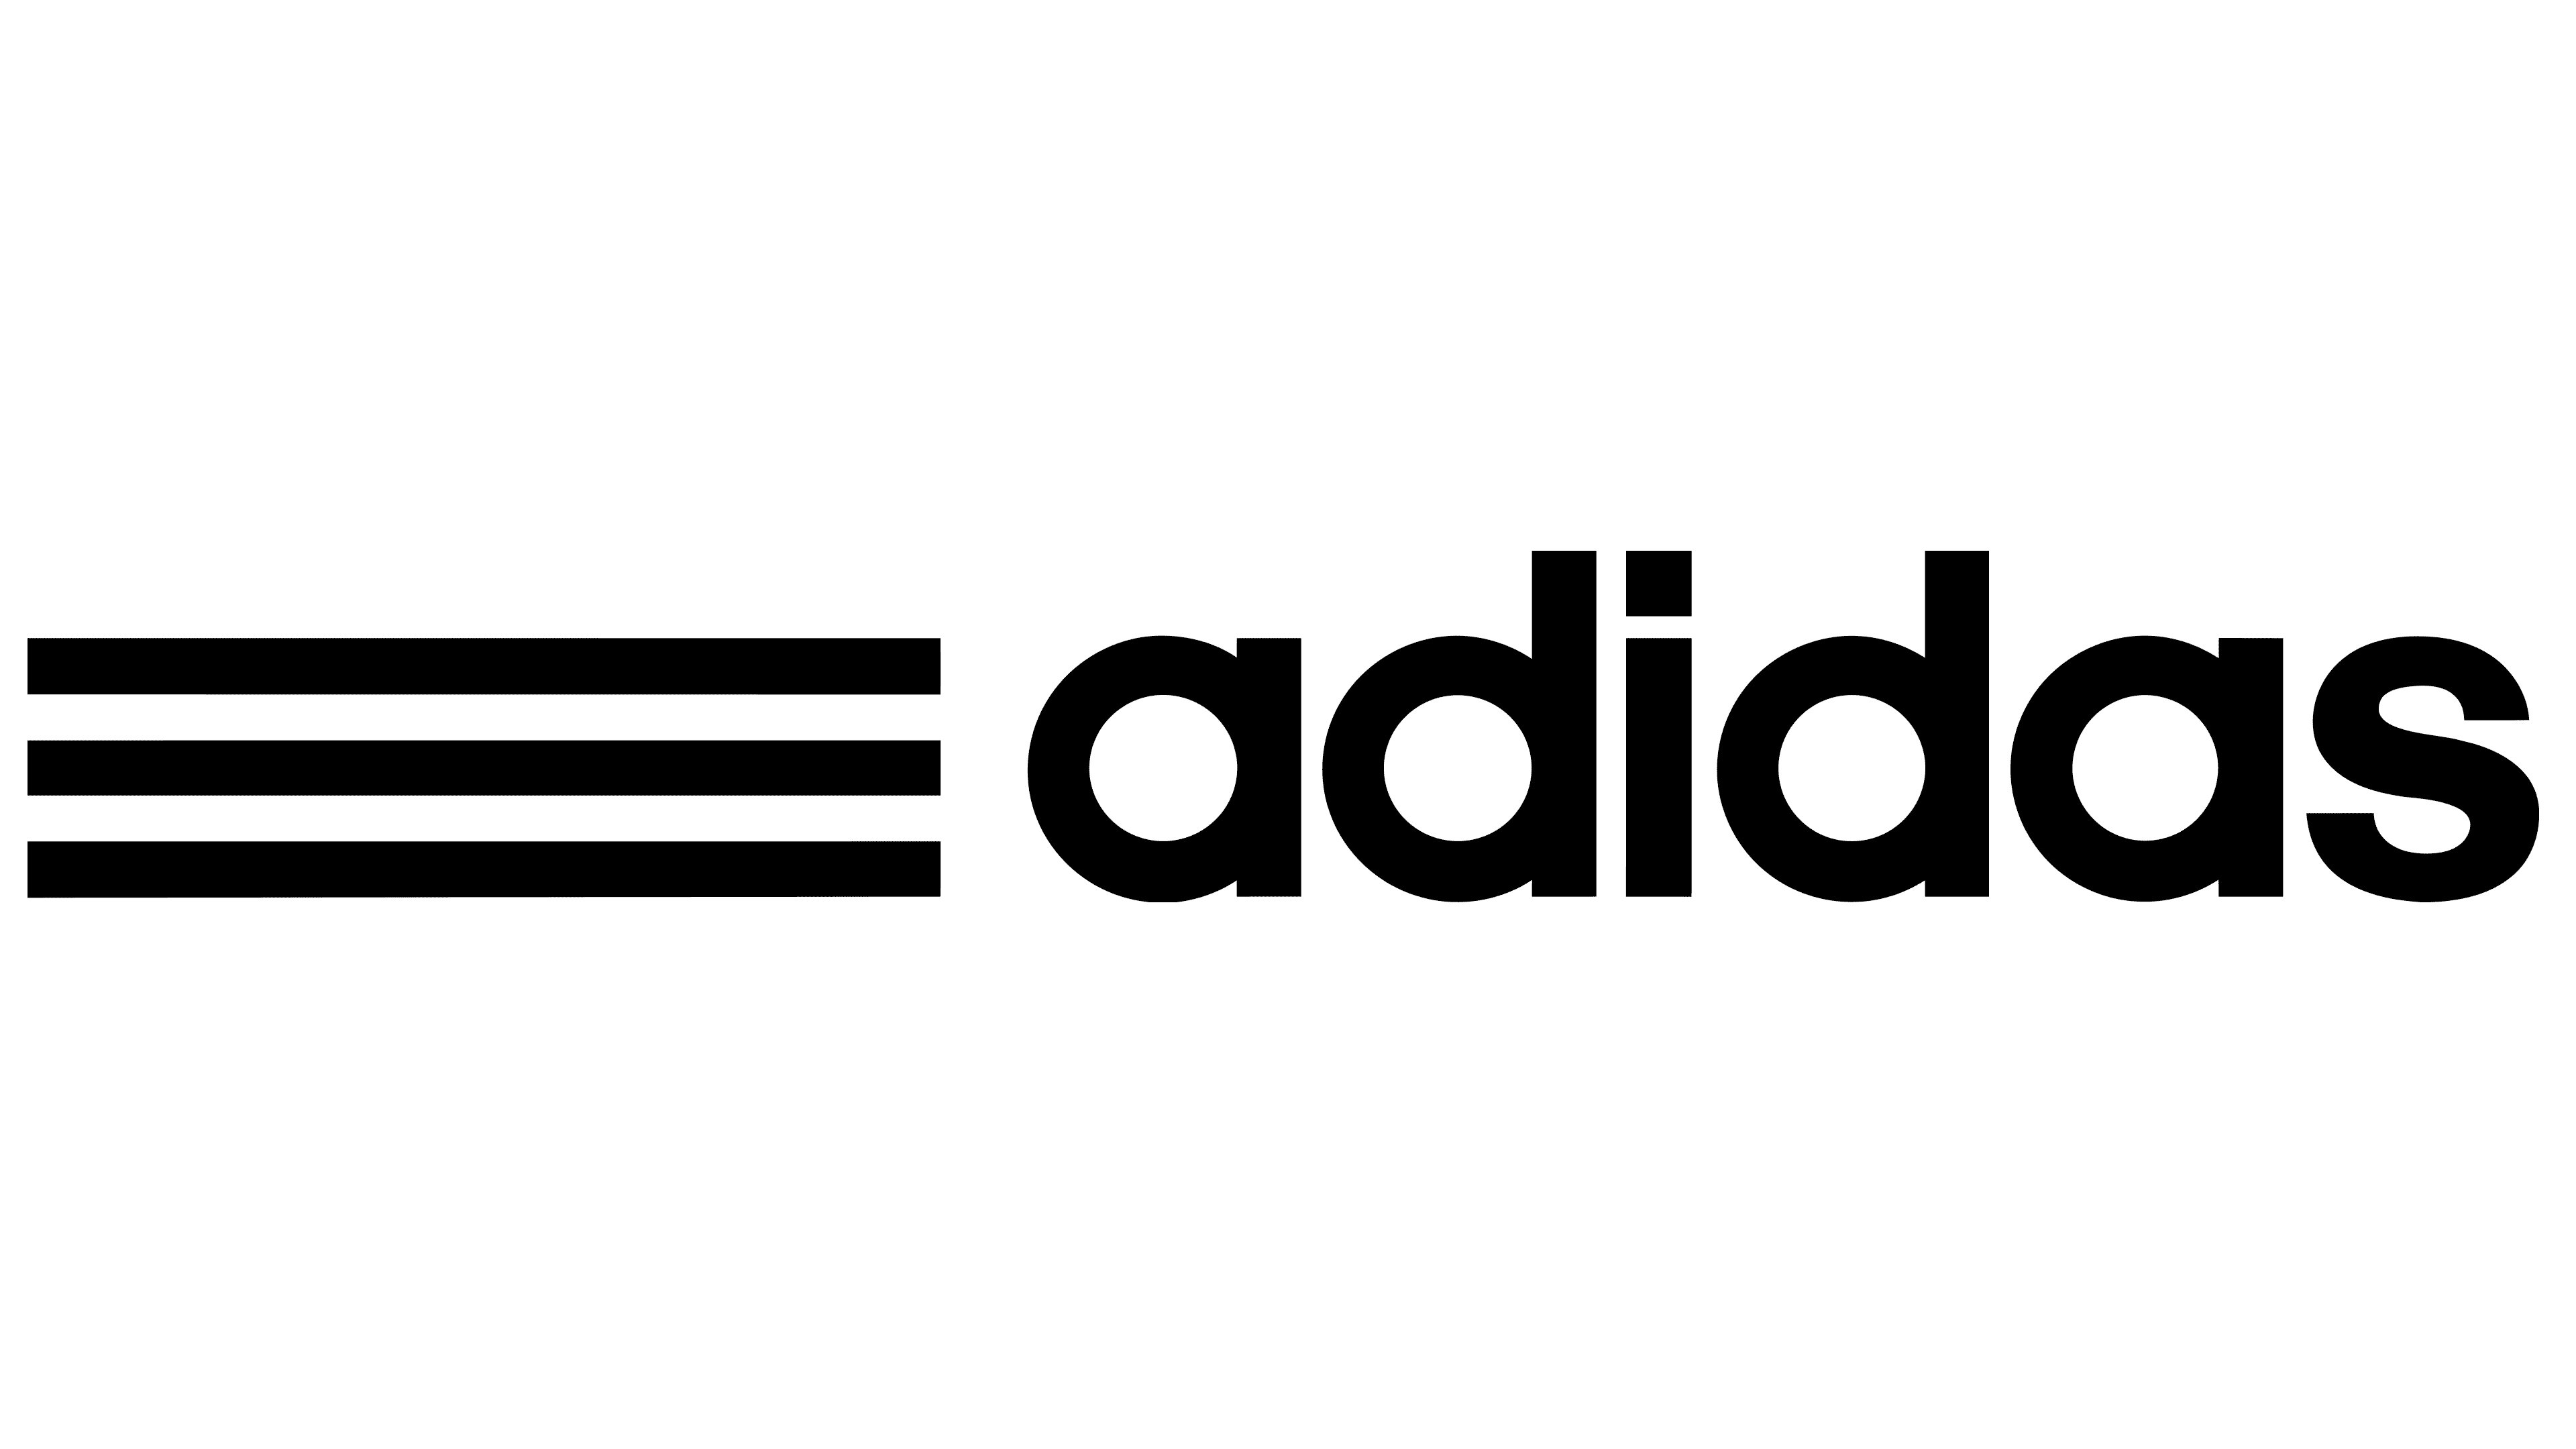 dedo índice laberinto Identidad Adidas Logo, symbol, meaning, history, PNG, brand